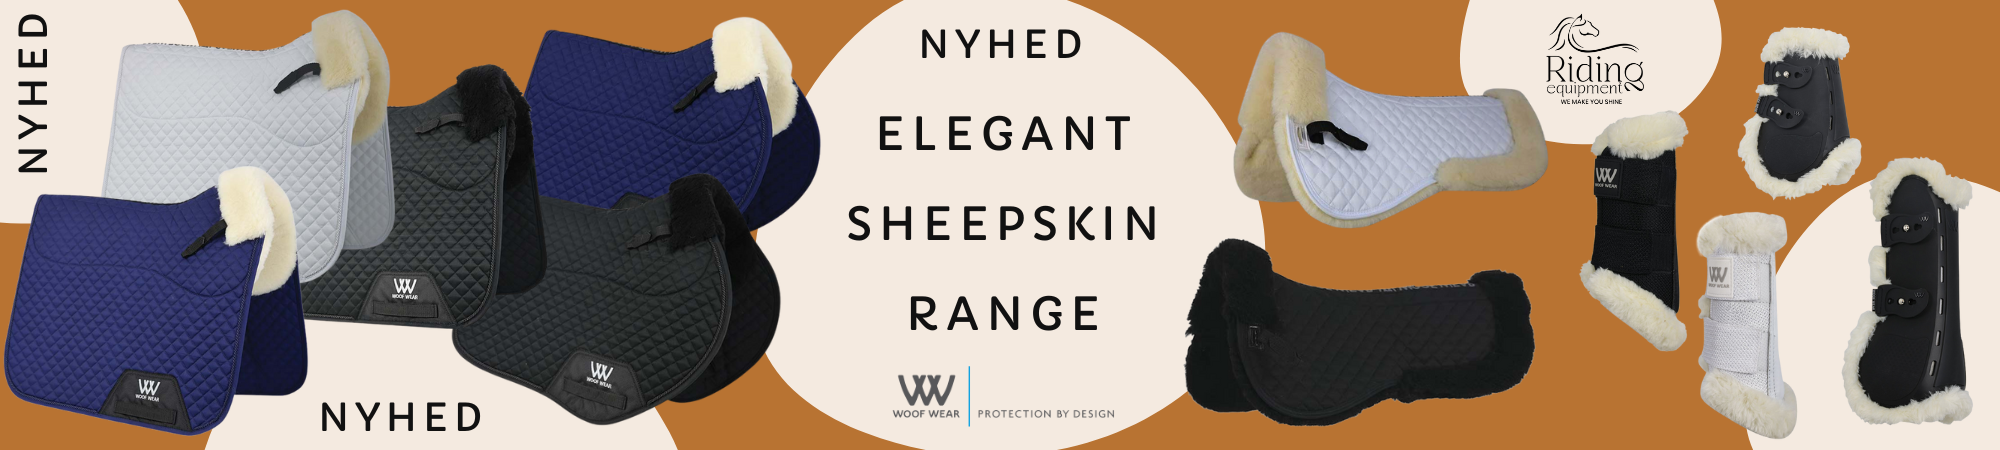 NEW Elegant Sheepskin Range Collection